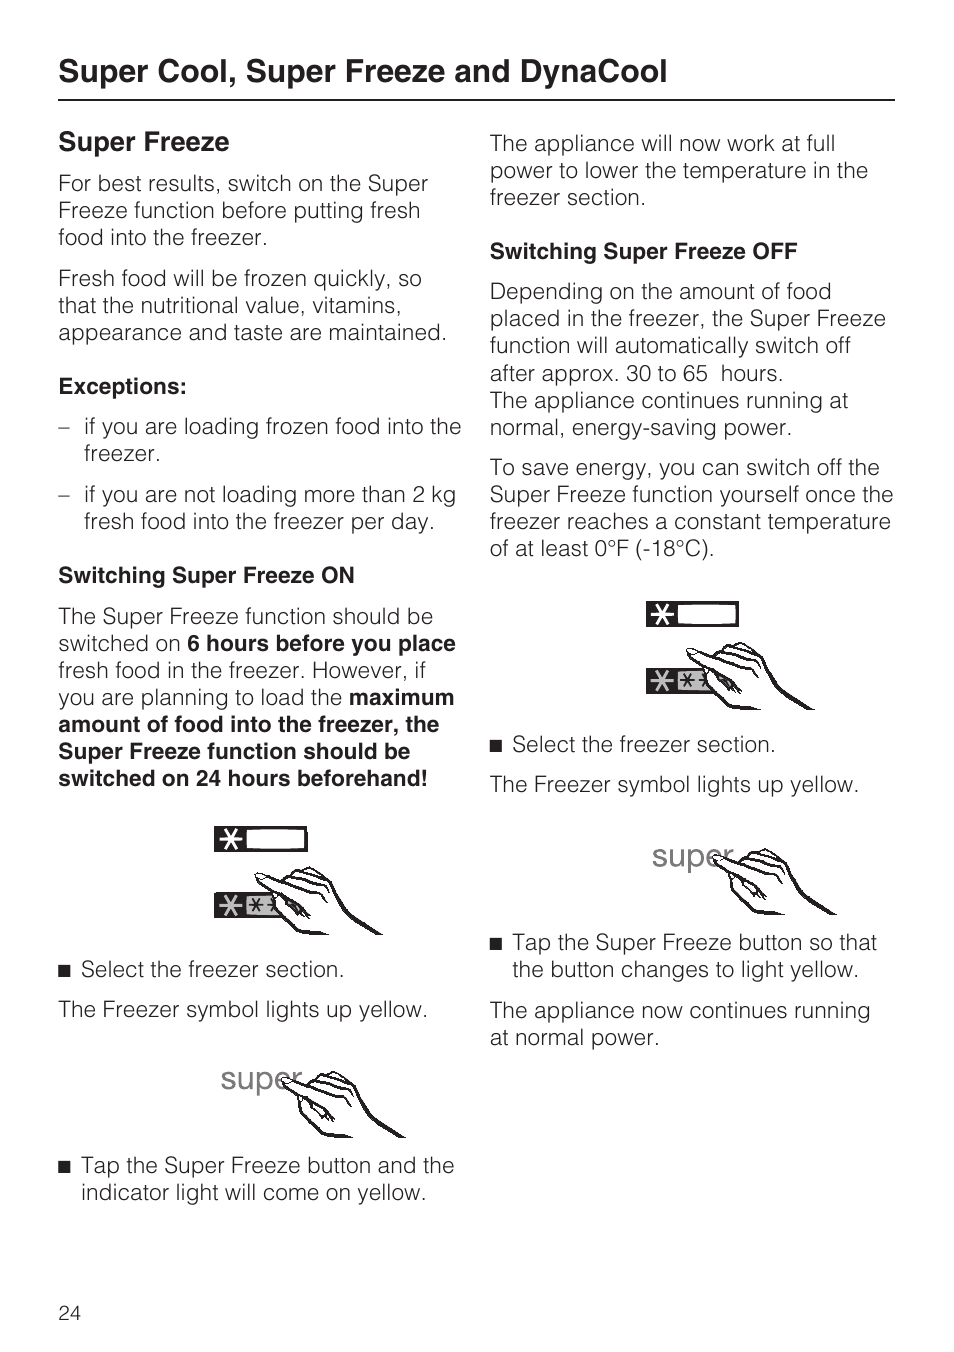 Super freeze 24, Super cool, super freeze and dynacool, Super freeze | Miele  KFN 14943 SD ED User Manual | Page 24 / 64 | Original mode